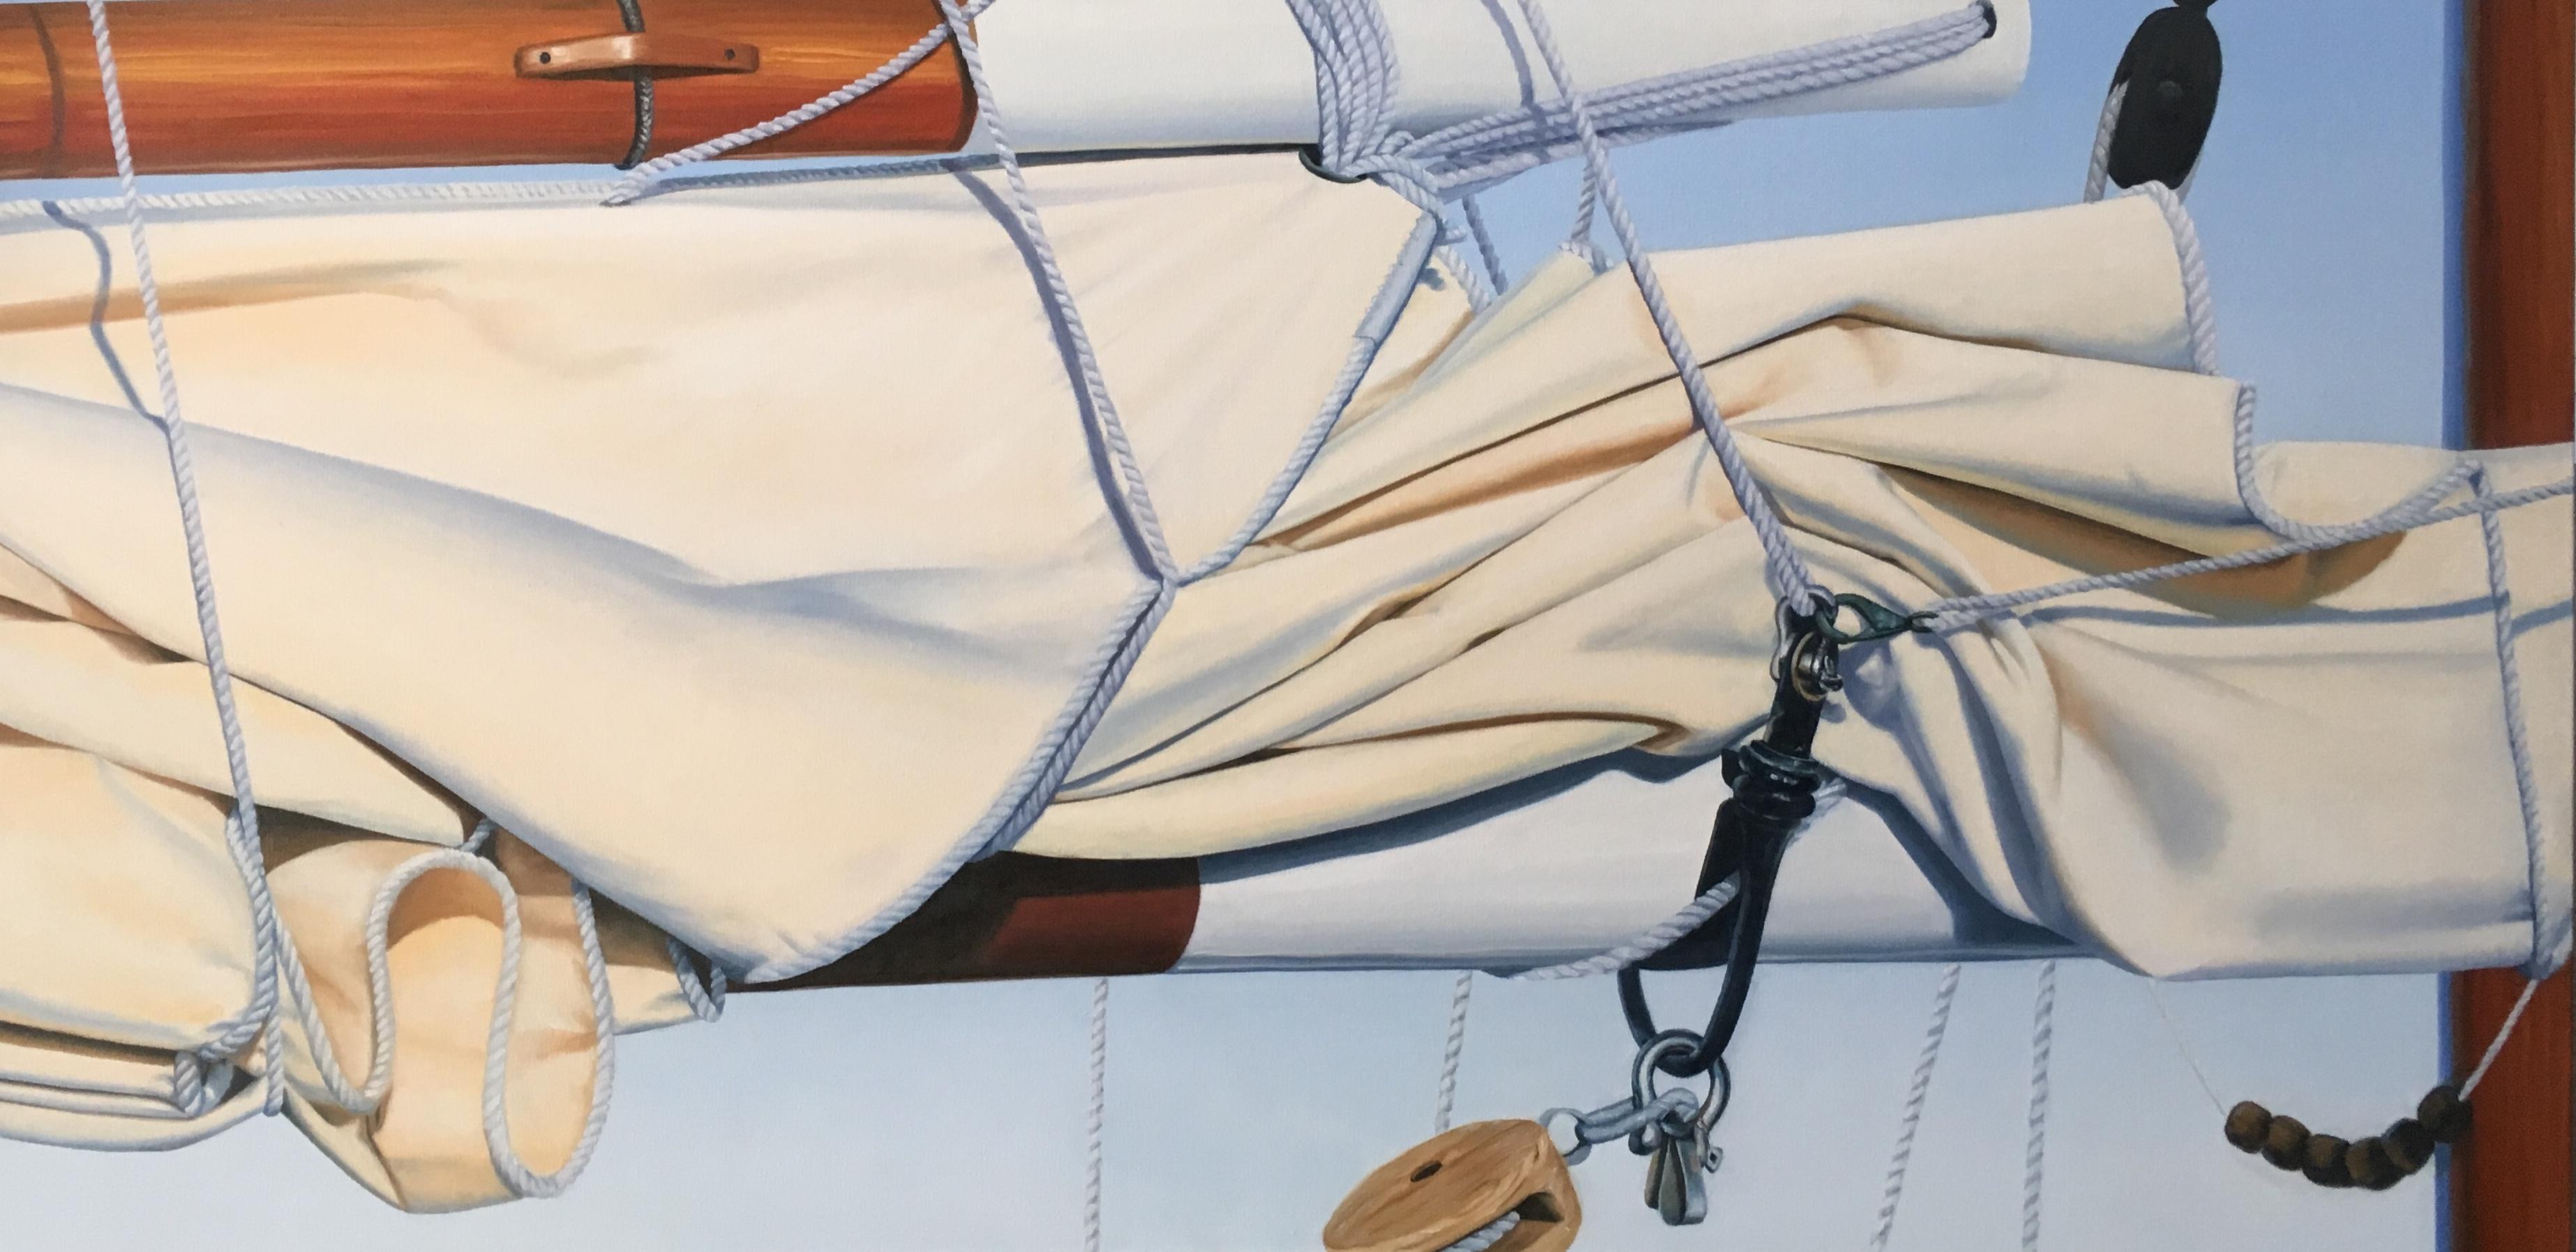 Boom, Gaff, and Sail - Art by Debbie Daniels